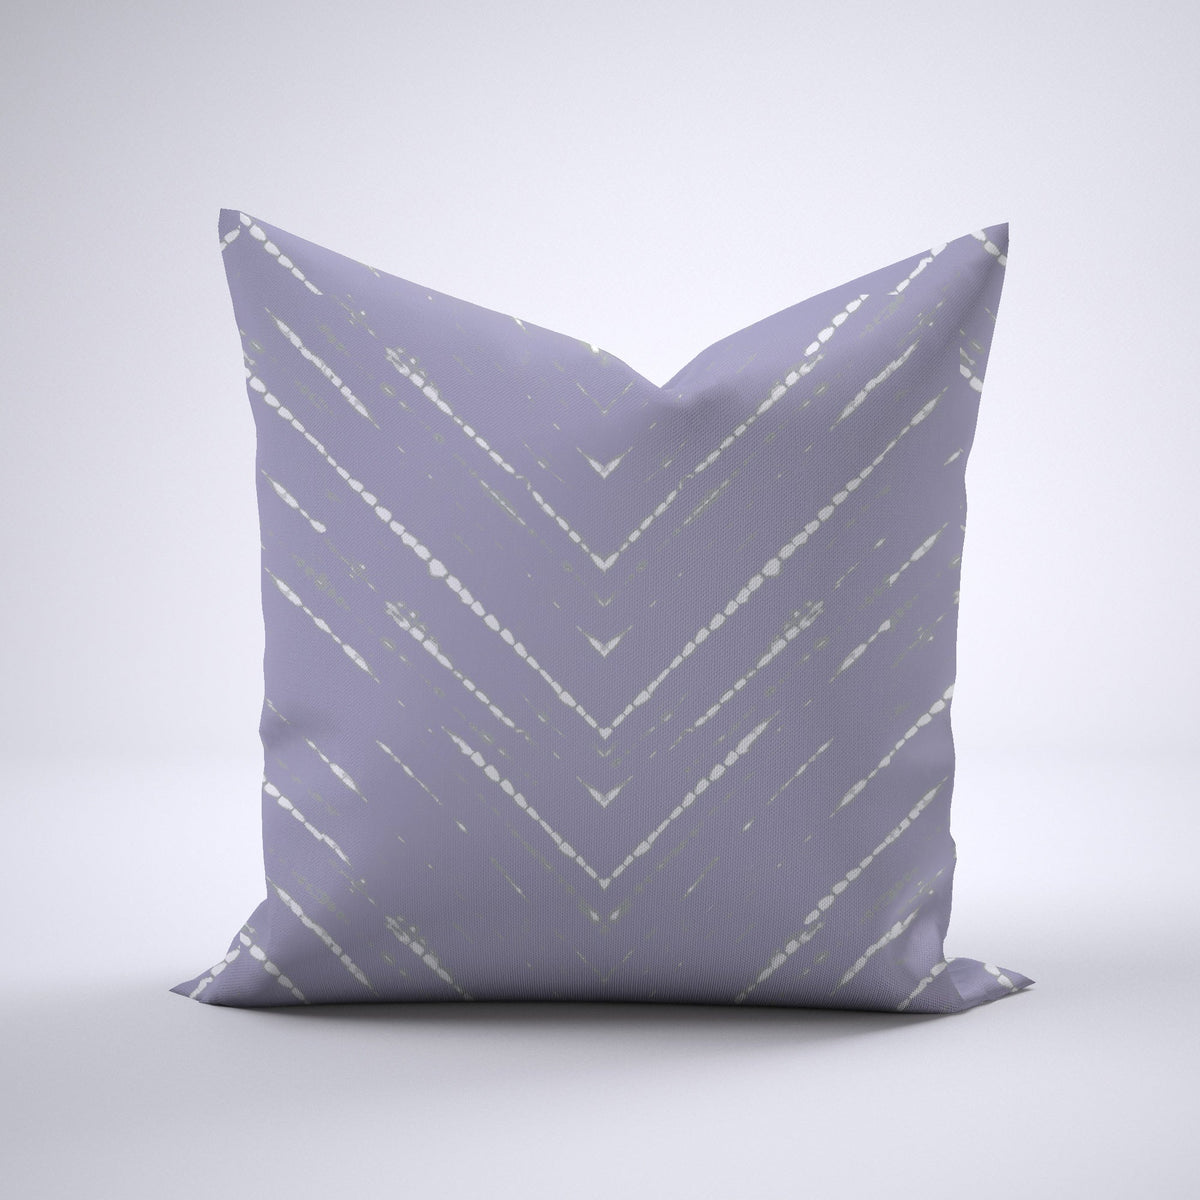 Throw Pillow - Mariko Lavender Bedding Collections, Pillows, Throw Pillows MWW 